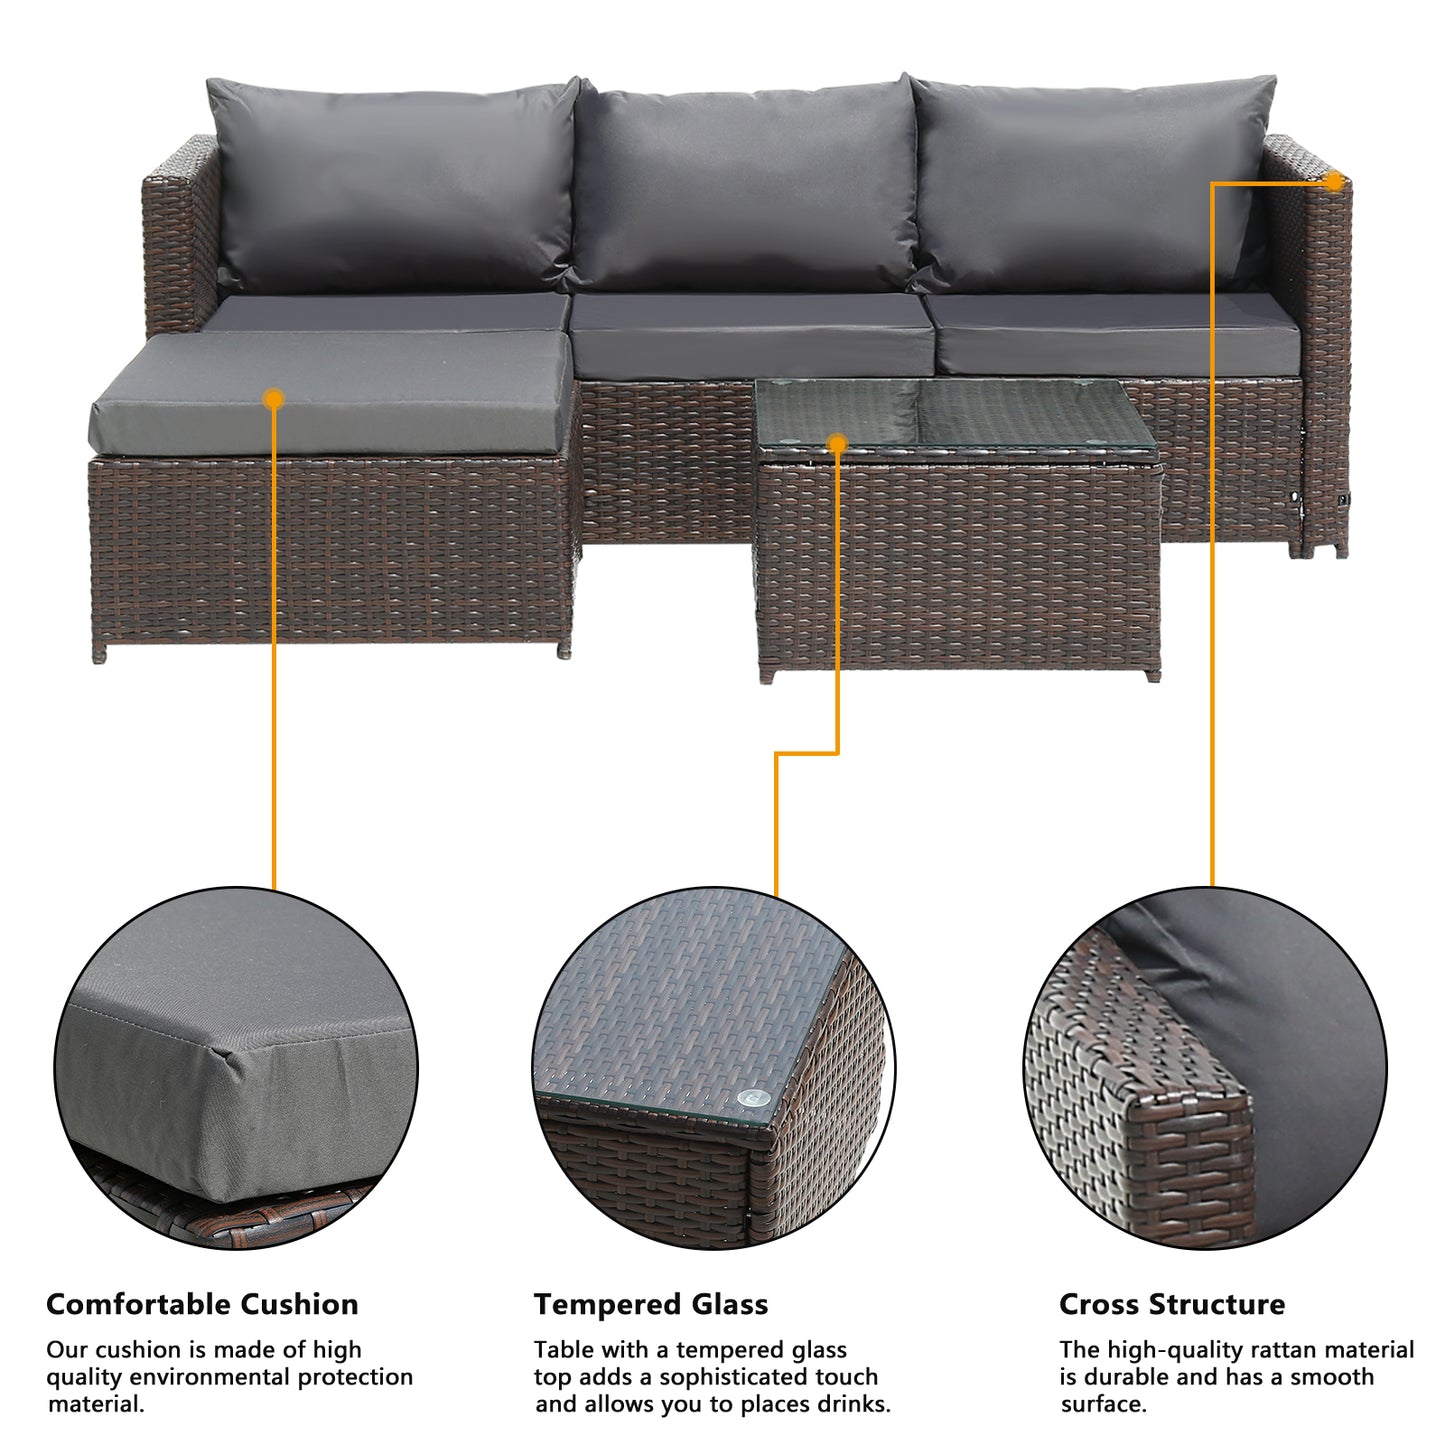 Oshion Three-Seater Corner Sofa - Grey Cushions and Brown Rattan